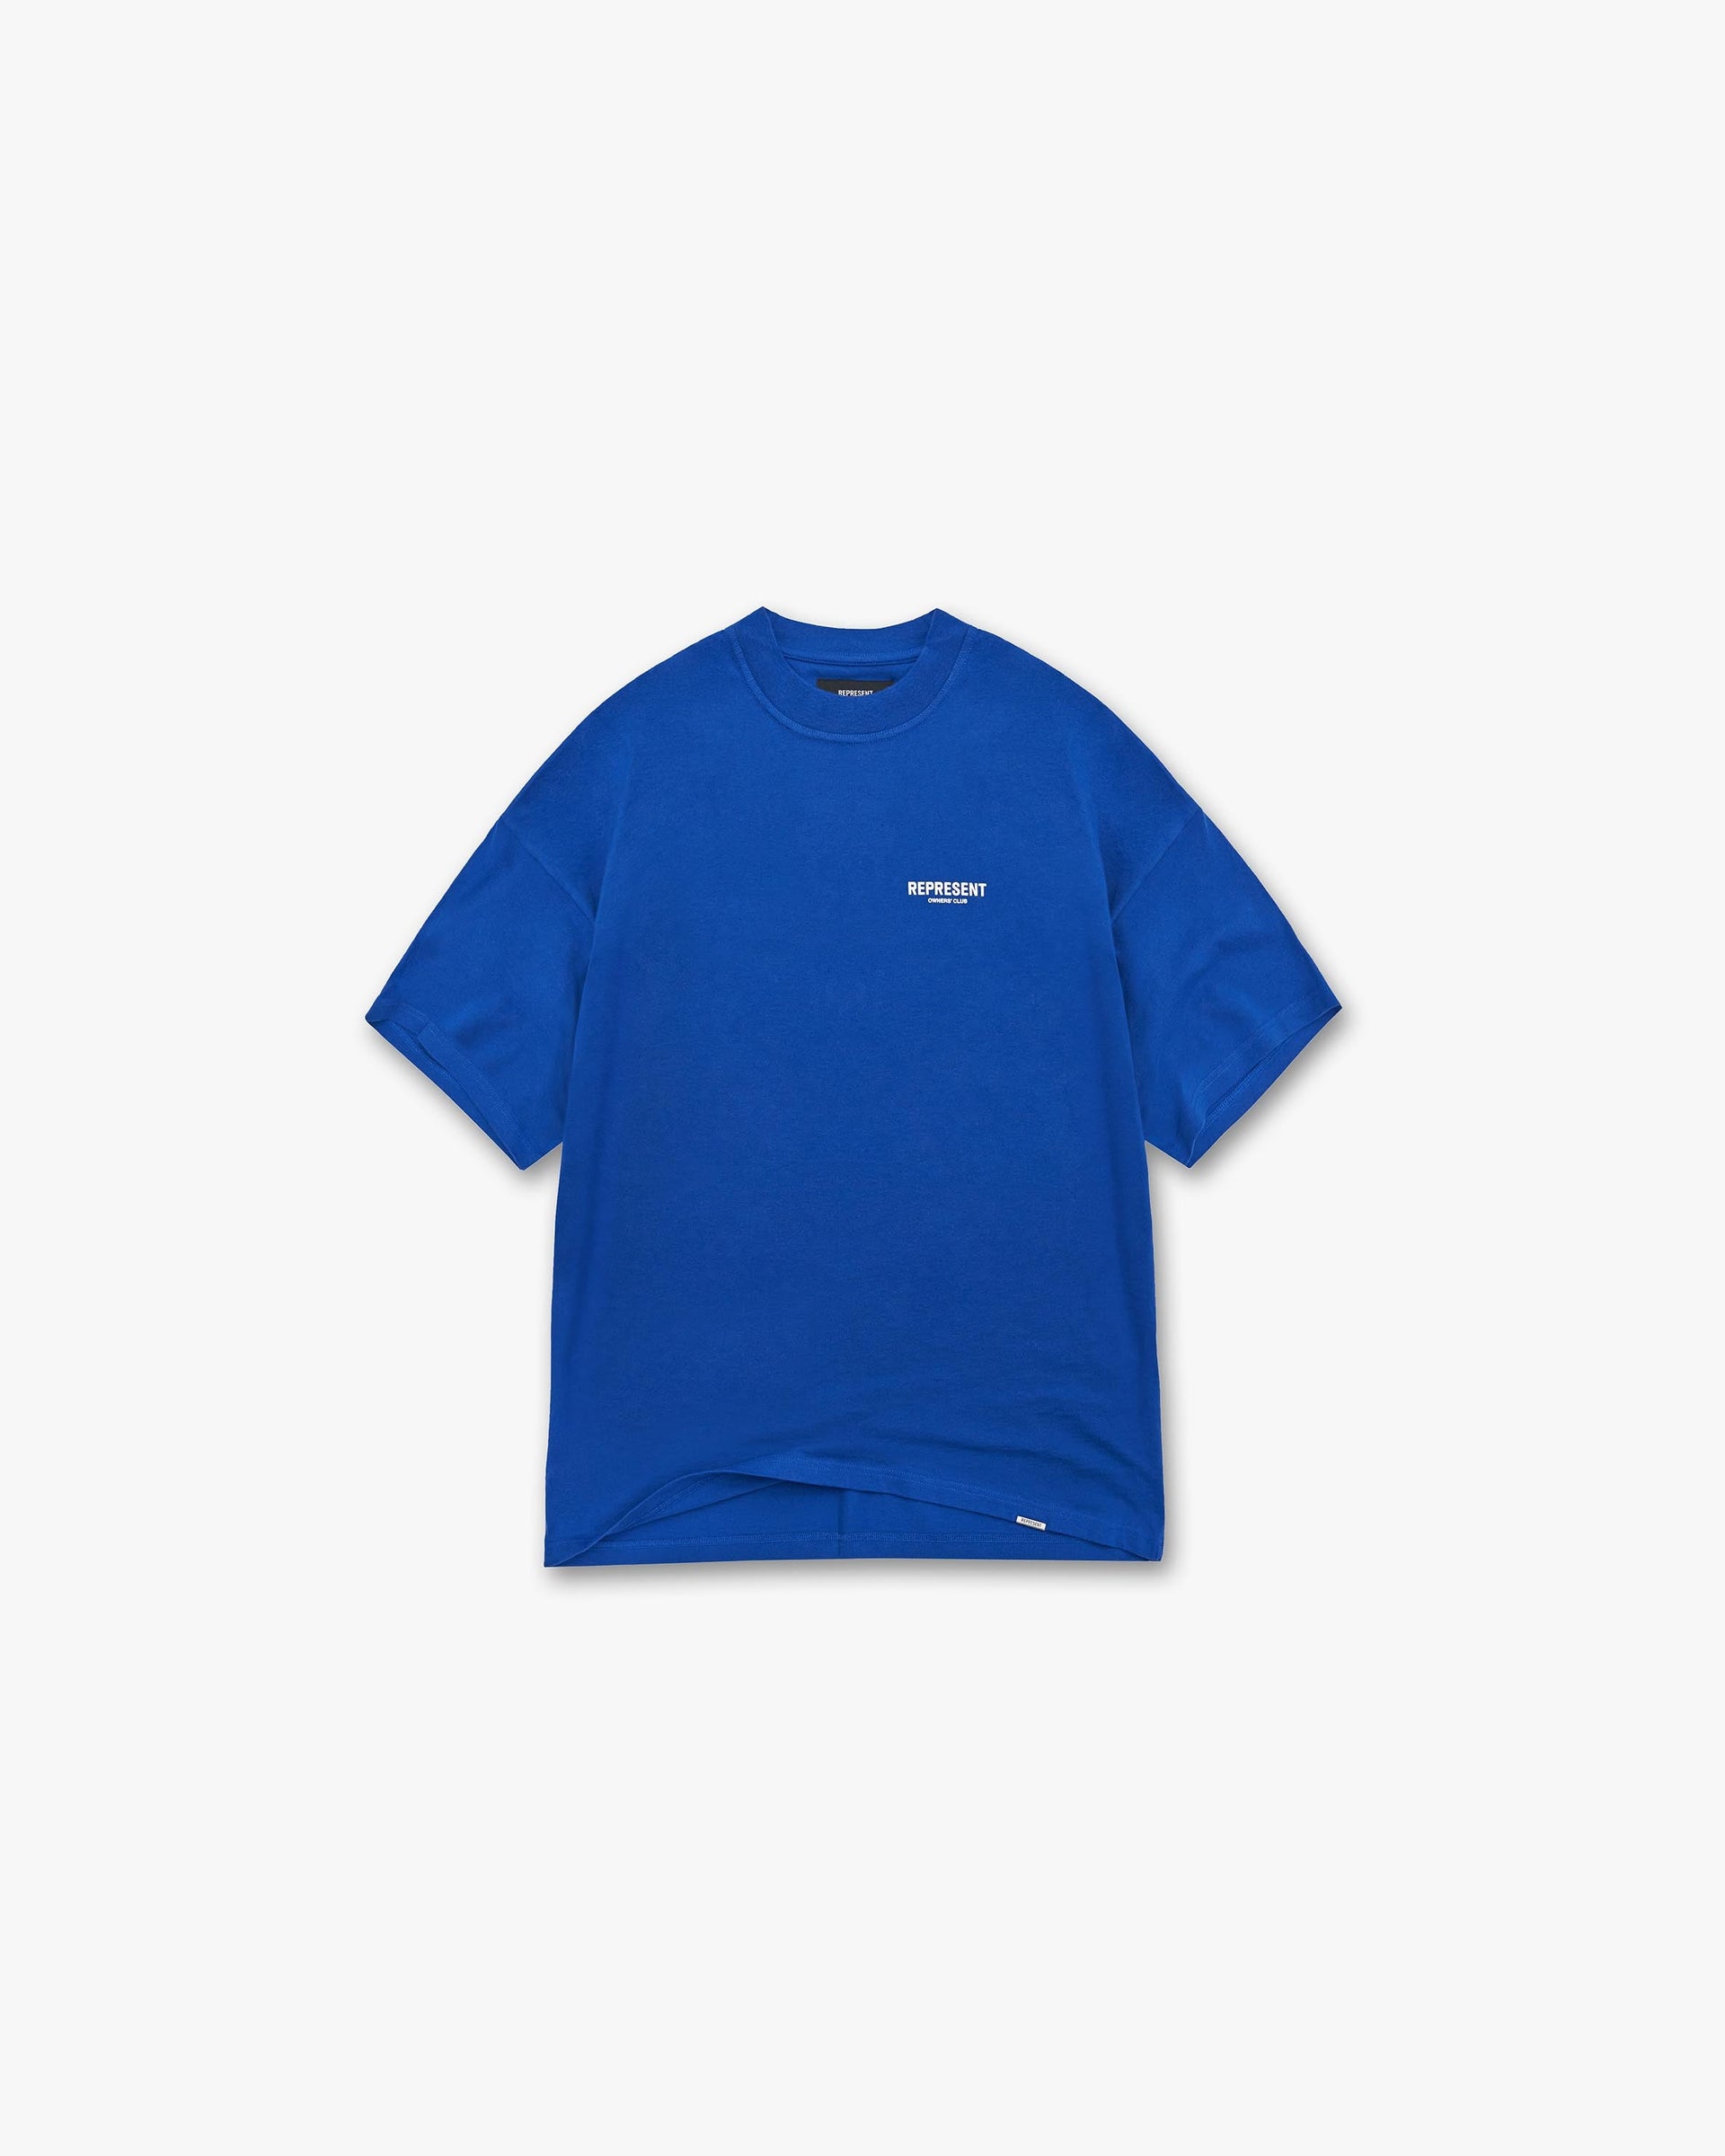 Represent Owners Club T-Shirt | Cobalt T-Shirts Owners Club | Represent Clo